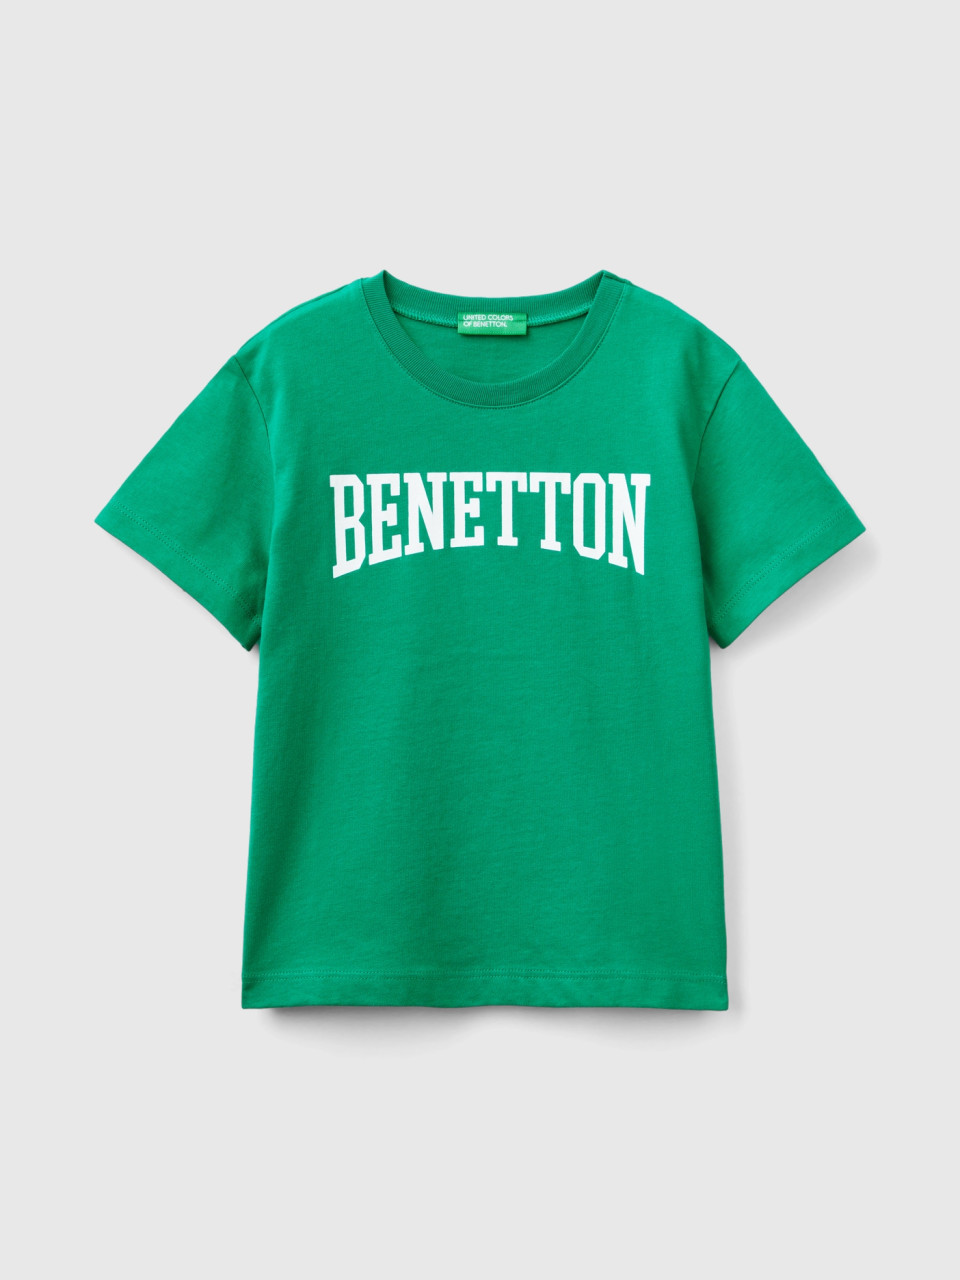 Benetton, 100% Cotton T-shirt With Logo, Green, Kids